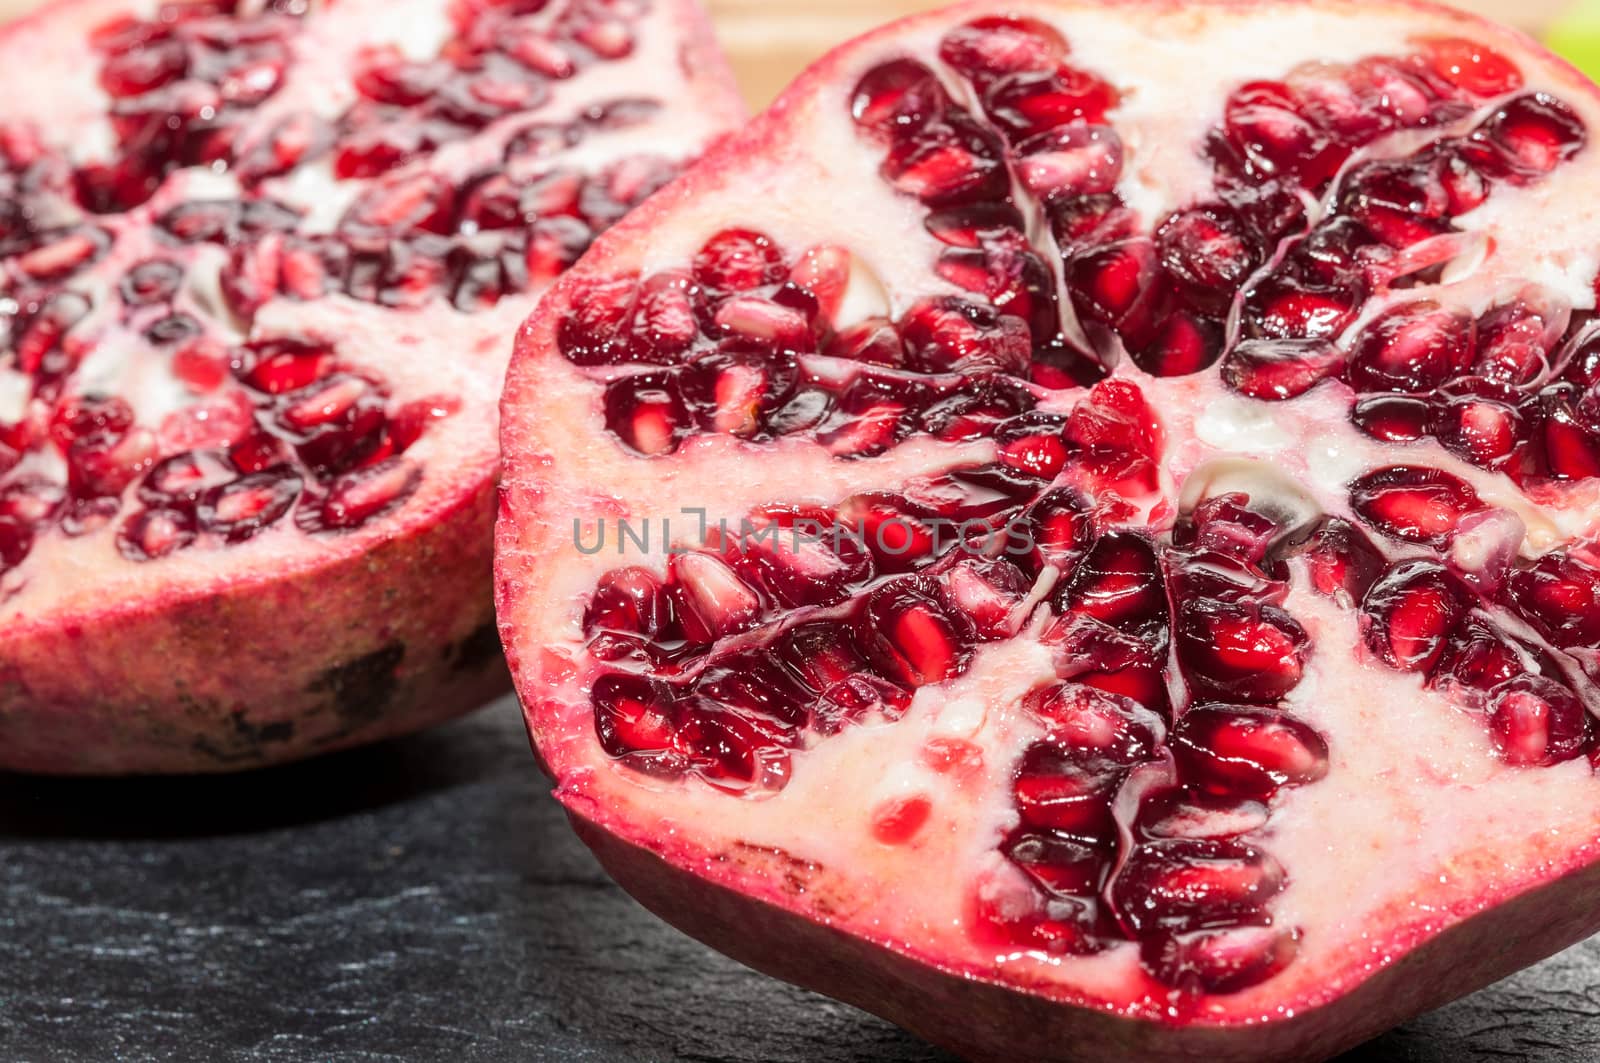 Seeds of pomegranate on a slate background